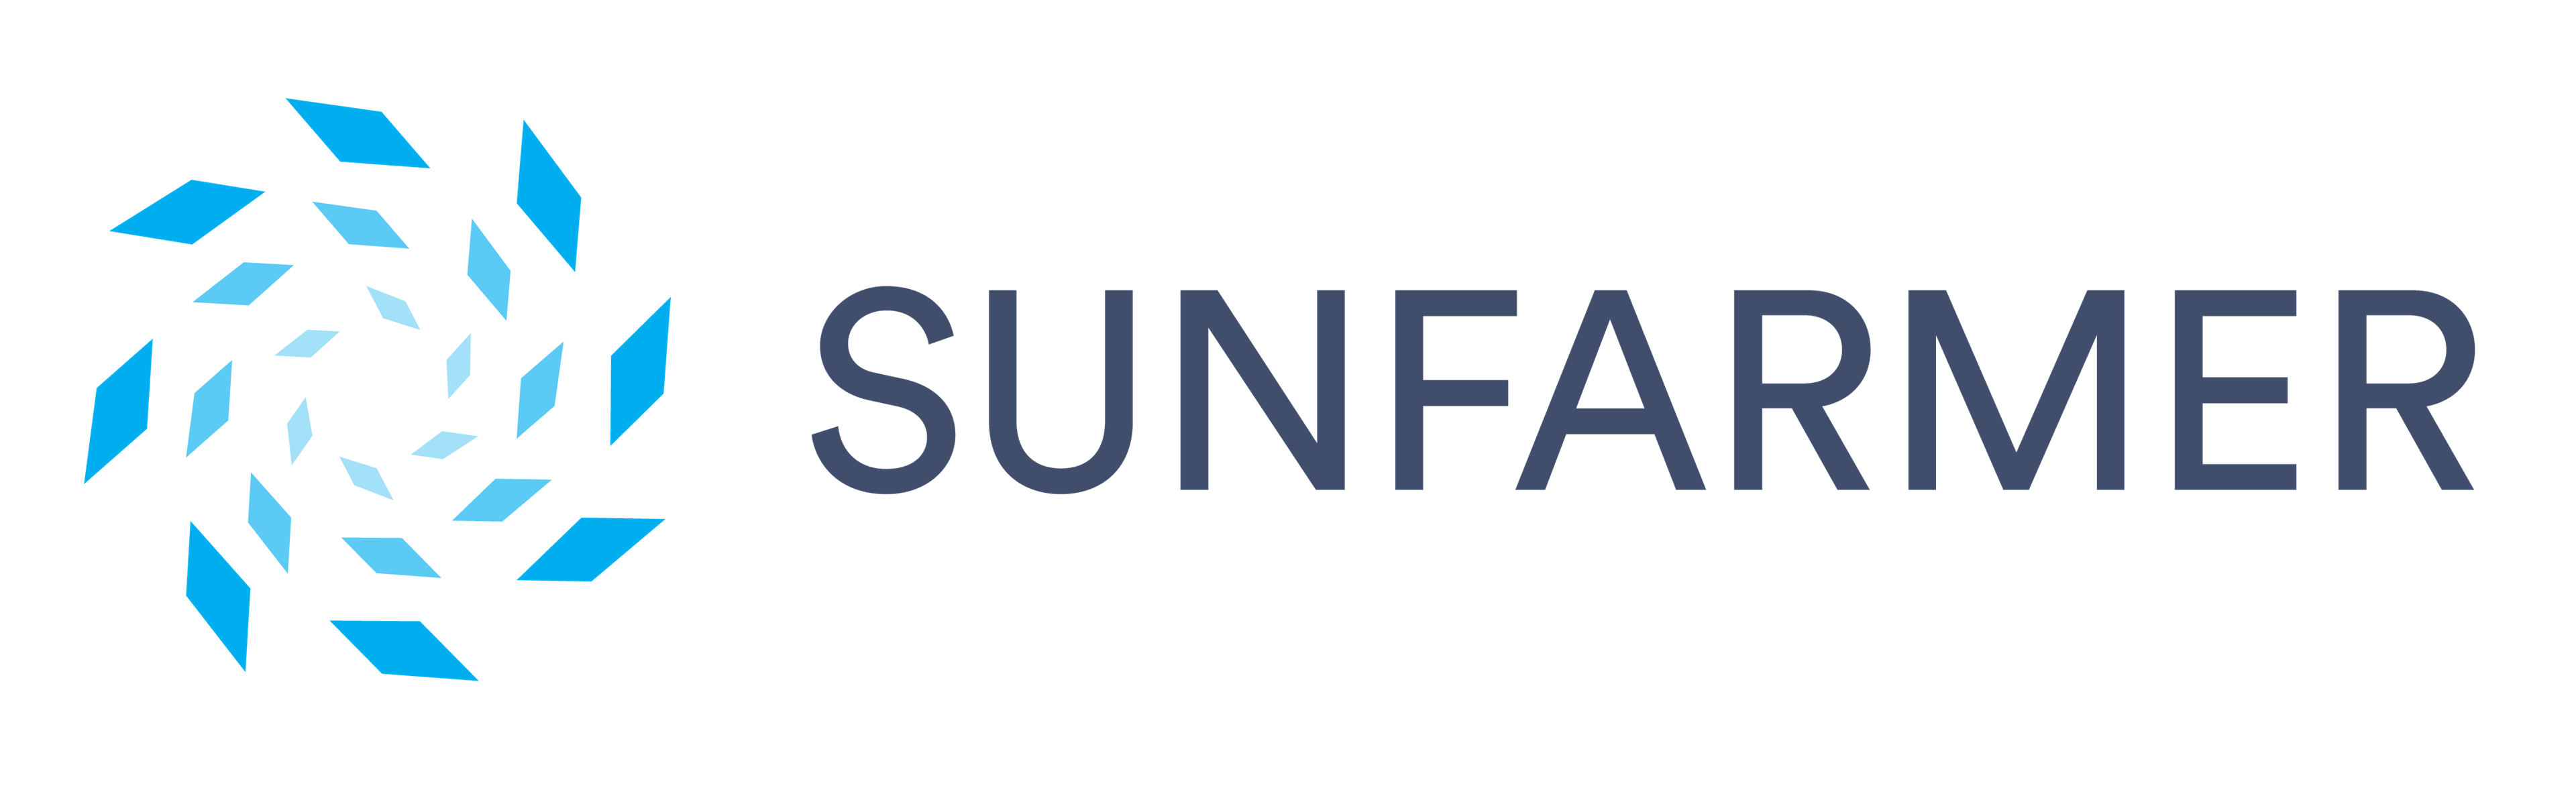 Sunfarmer logo.png